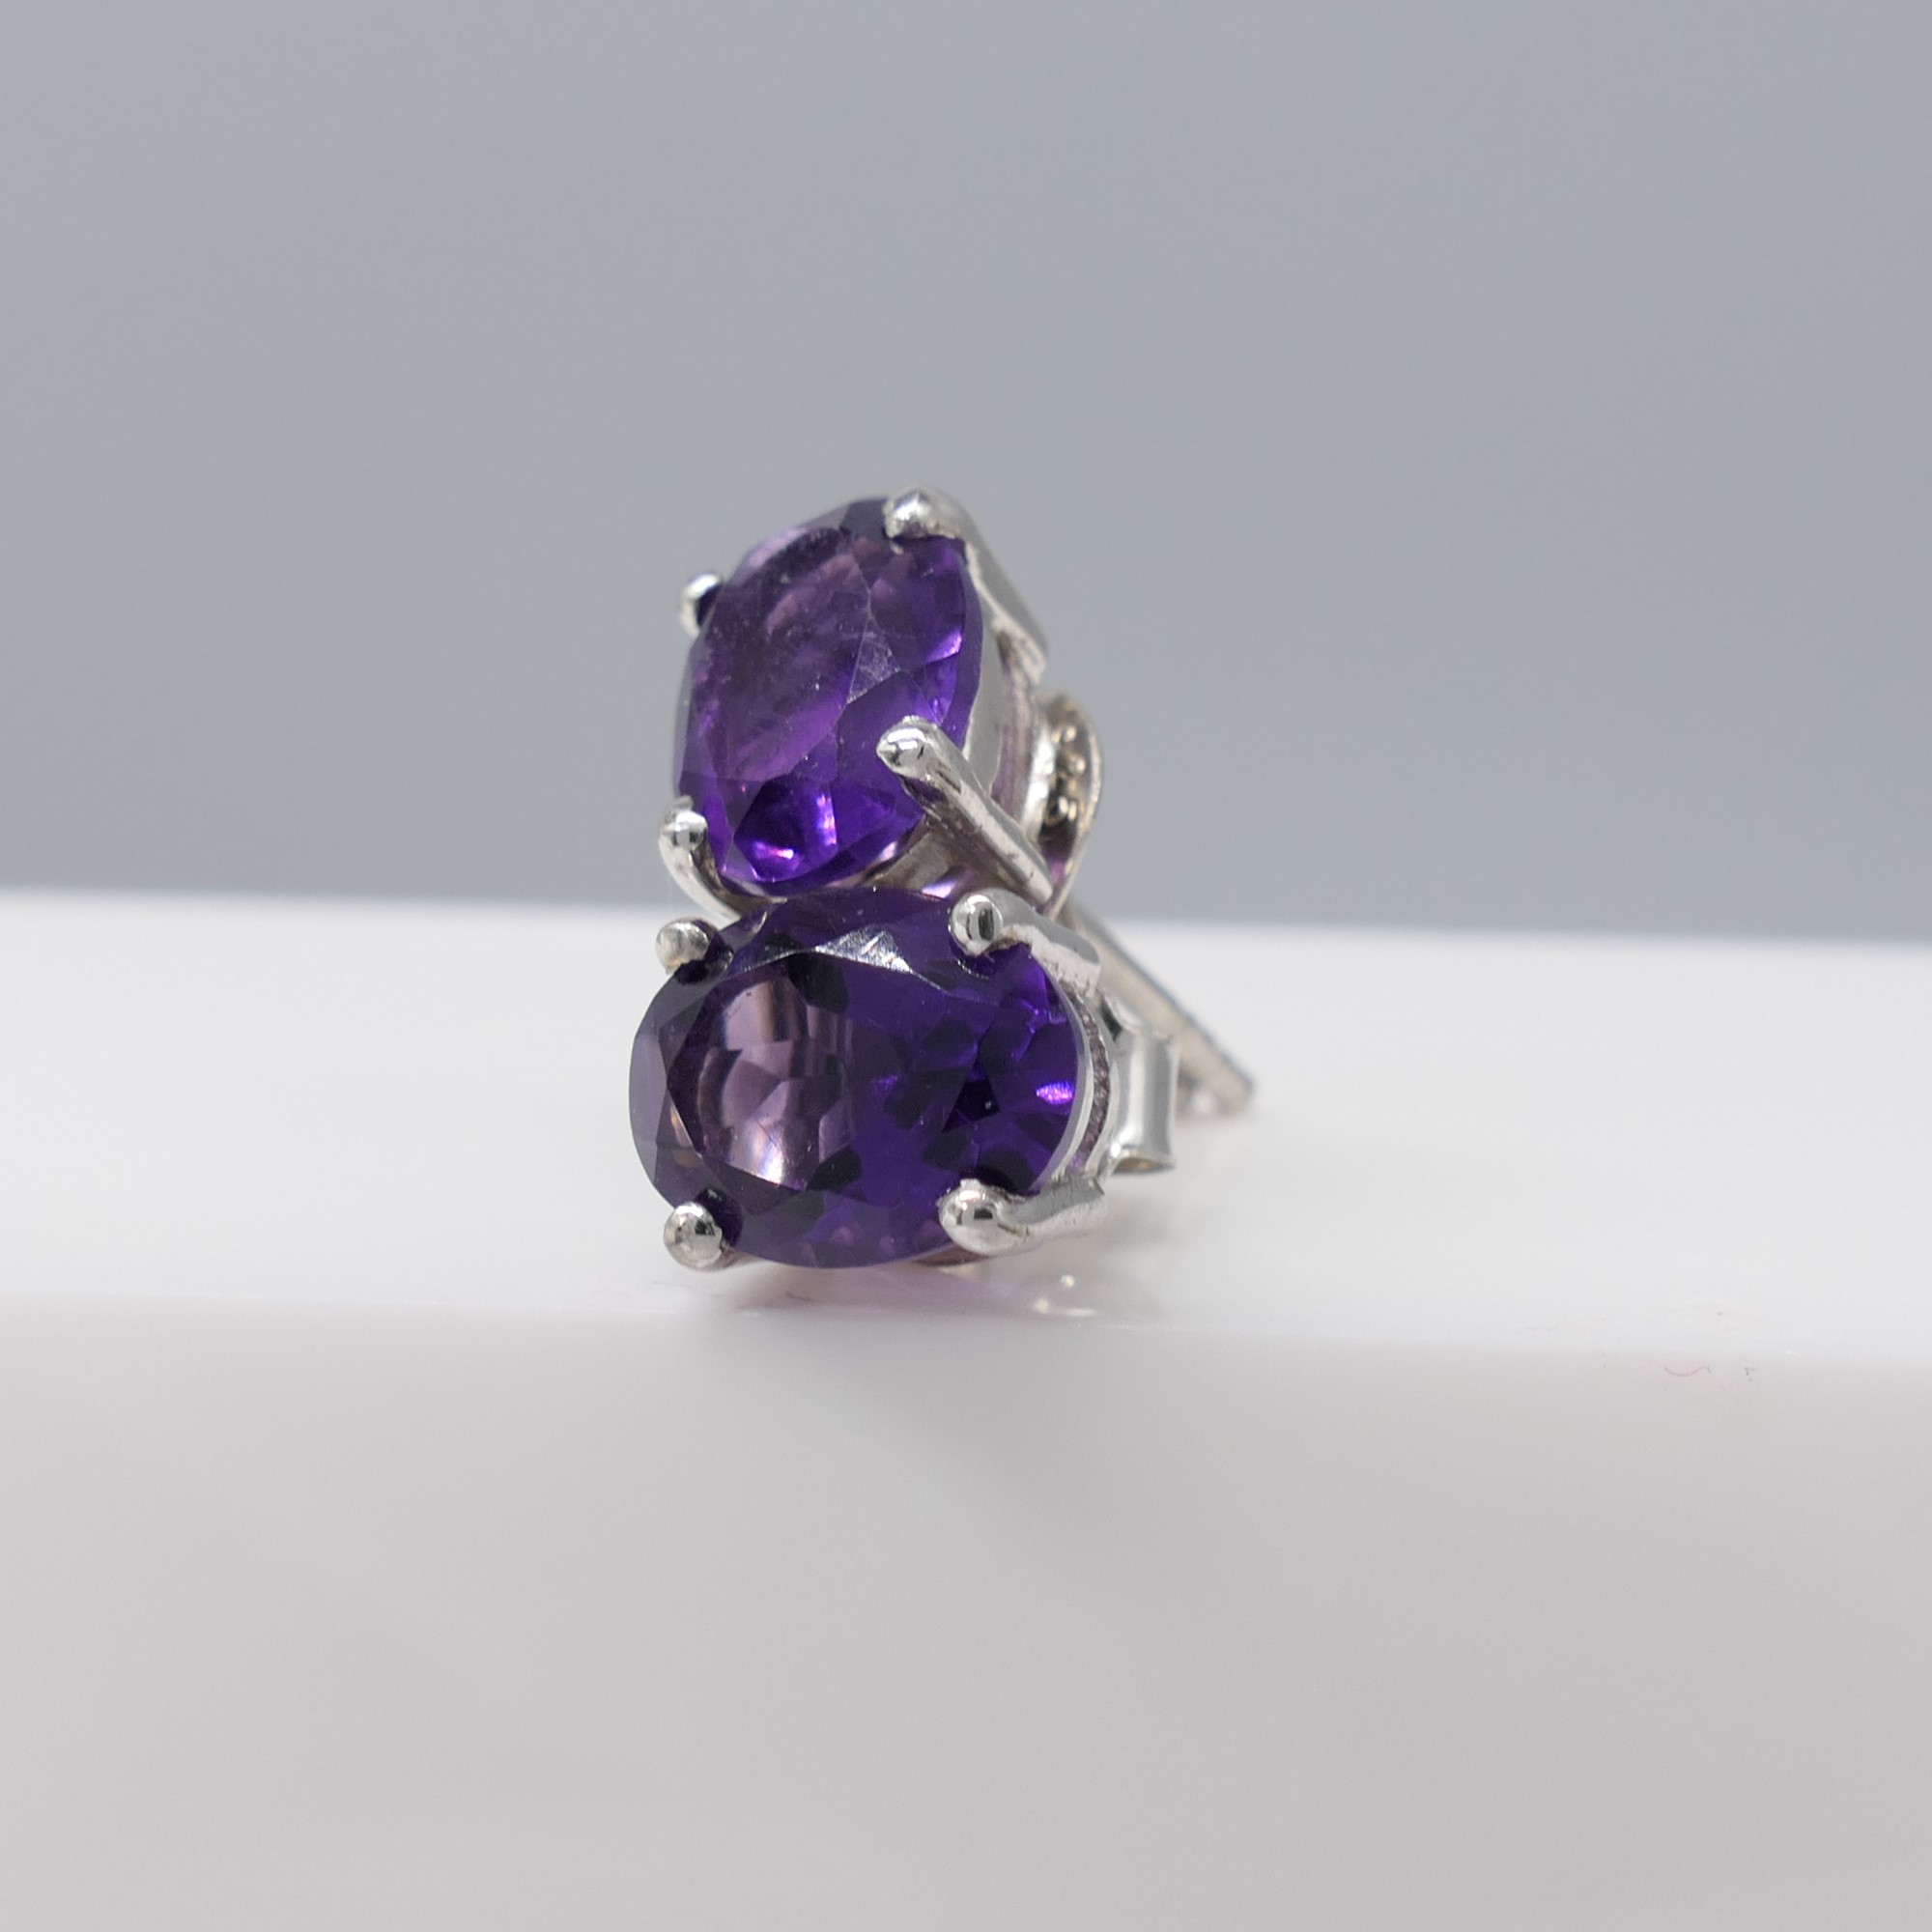 Pair of natural purple amethyst gemstone ear studs in silver - Image 3 of 5